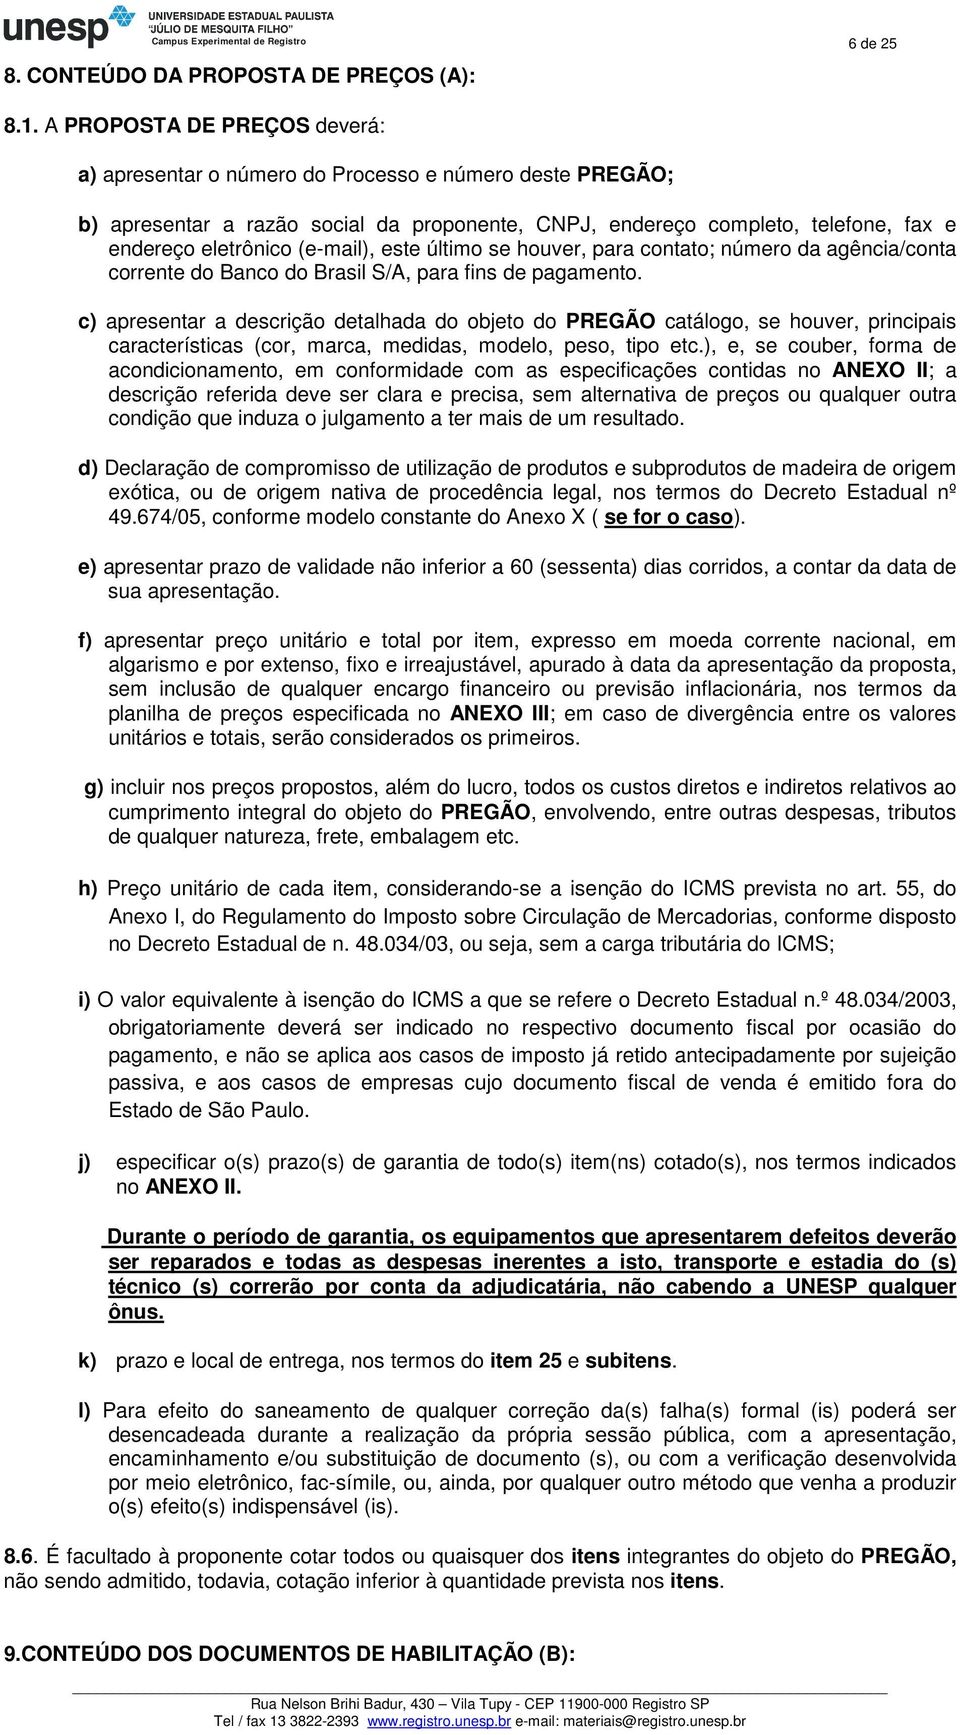 (e-mail), este último se houver, para contato; número da agência/conta corrente do Banco do Brasil S/A, para fins de pagamento.